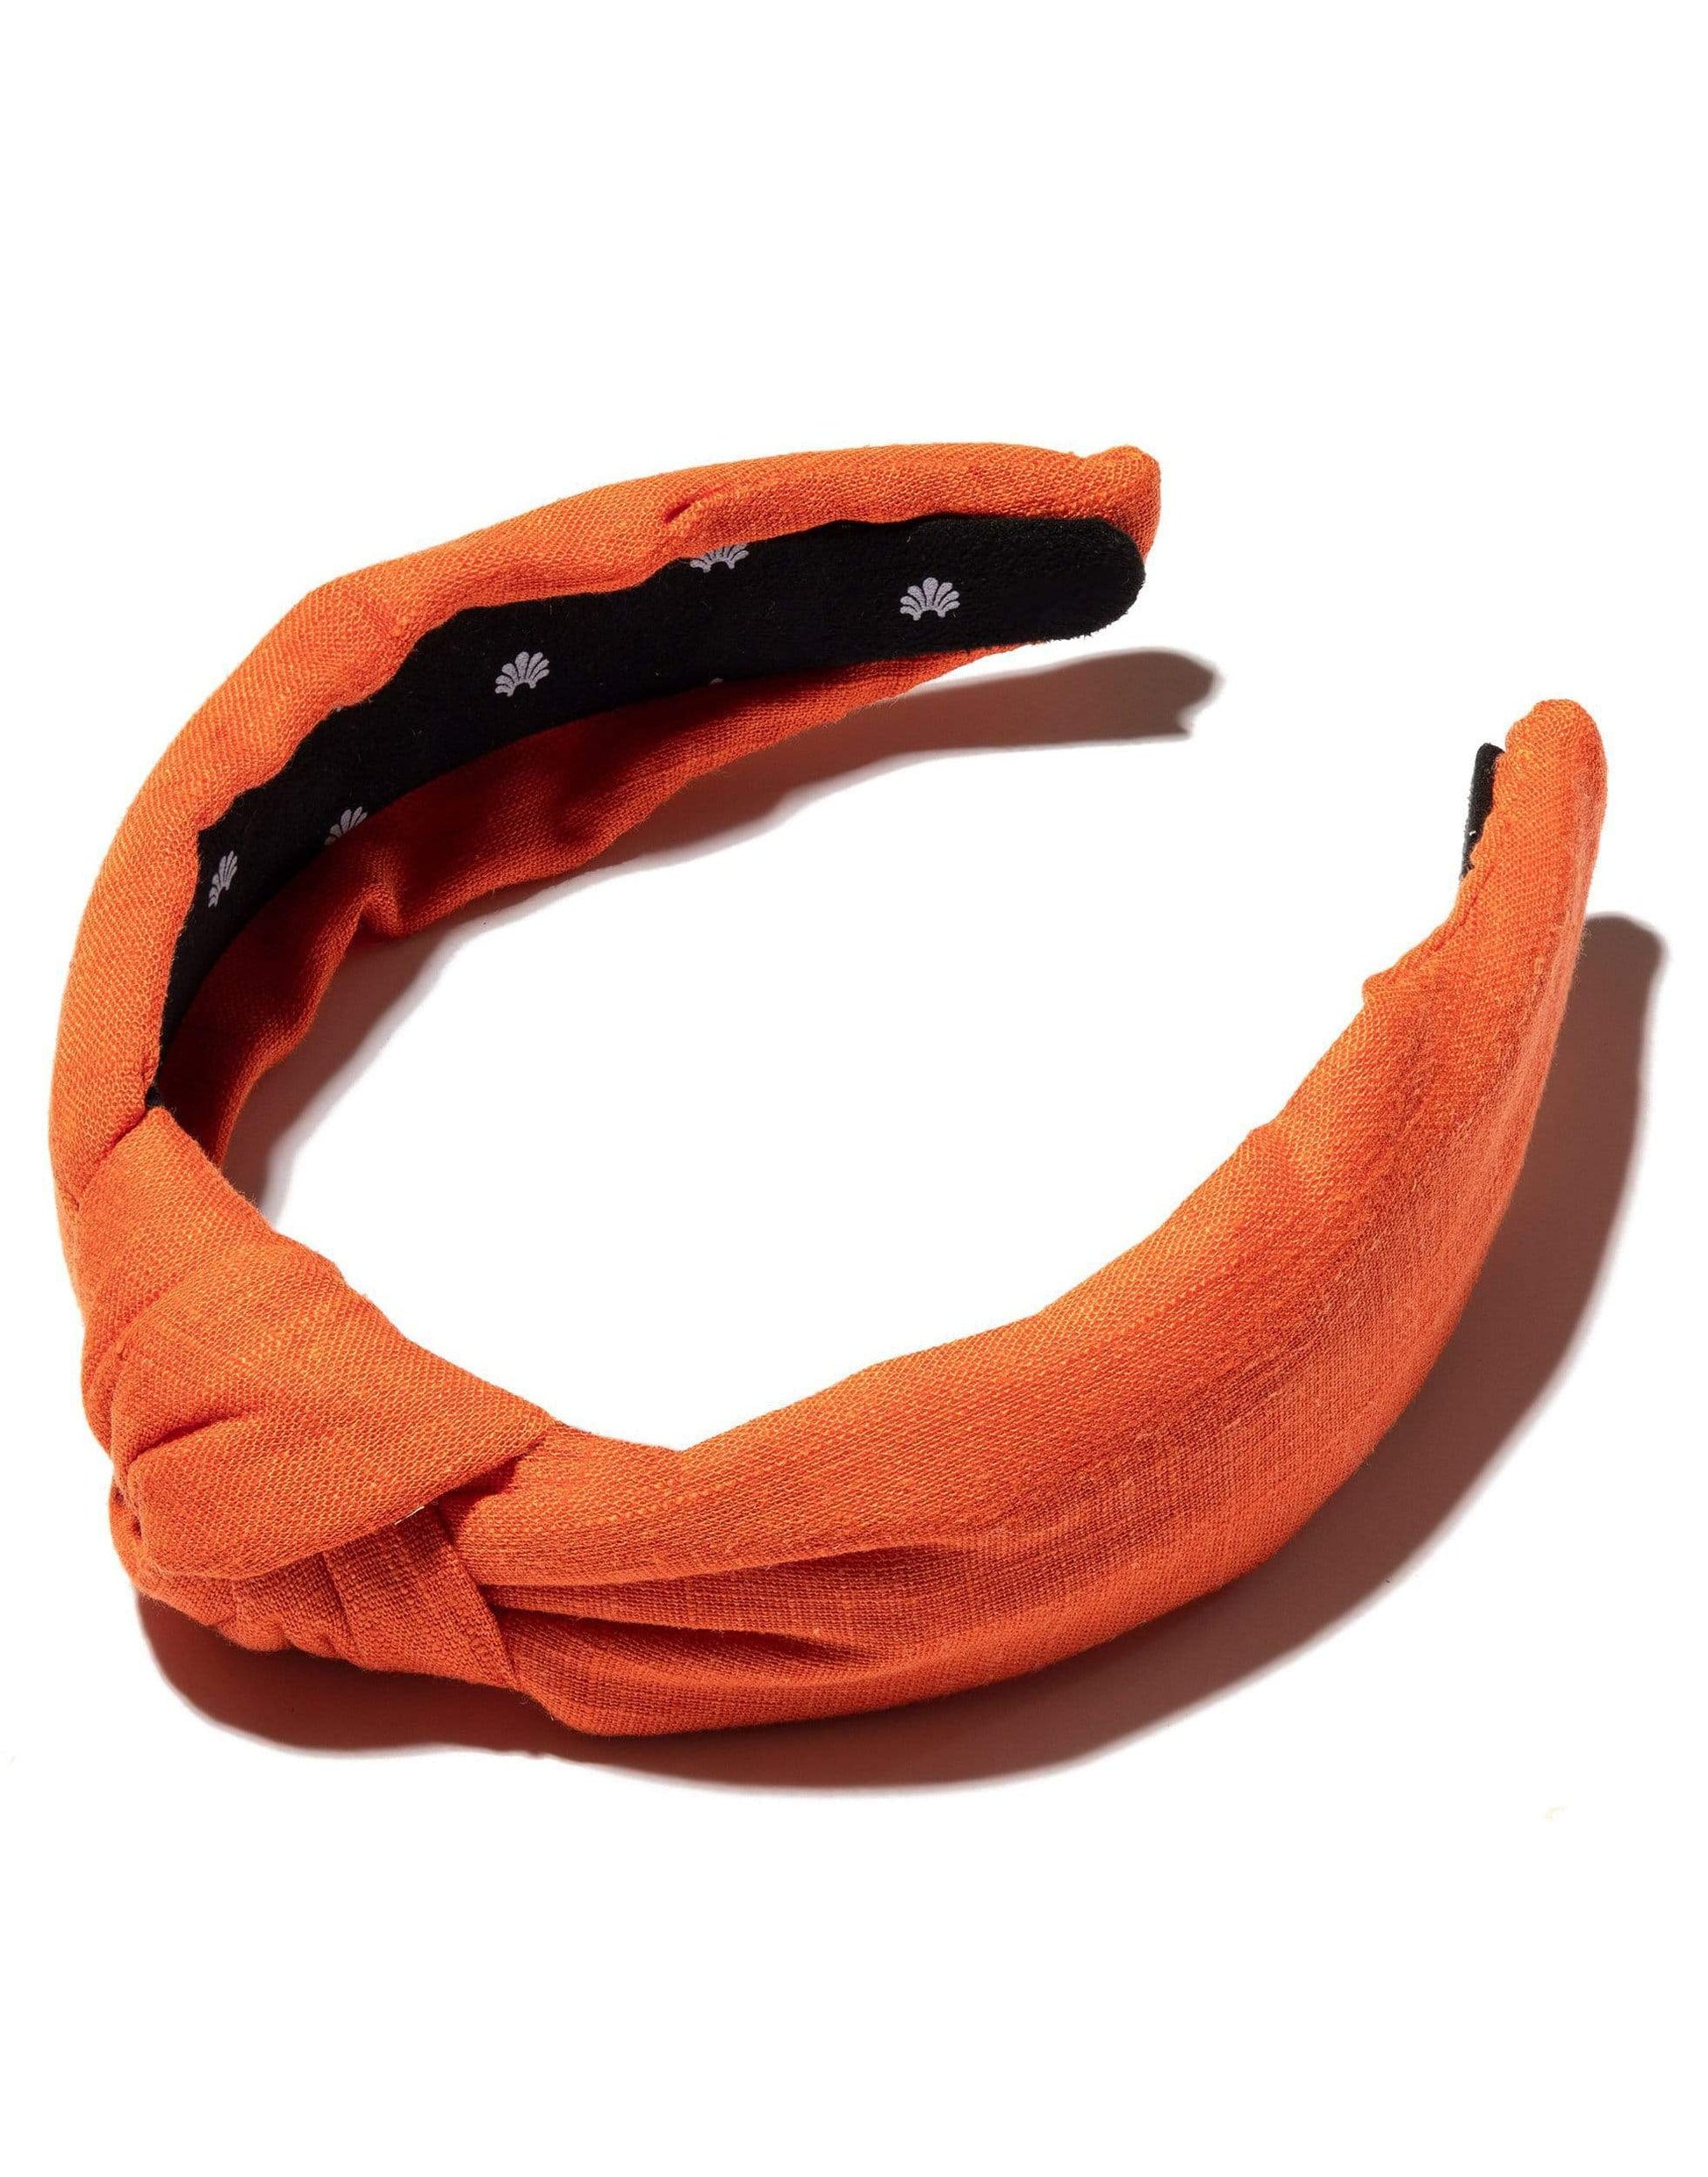 LELE SADOUGHI DESIGNS-Orange Linen Headband-ORANGE